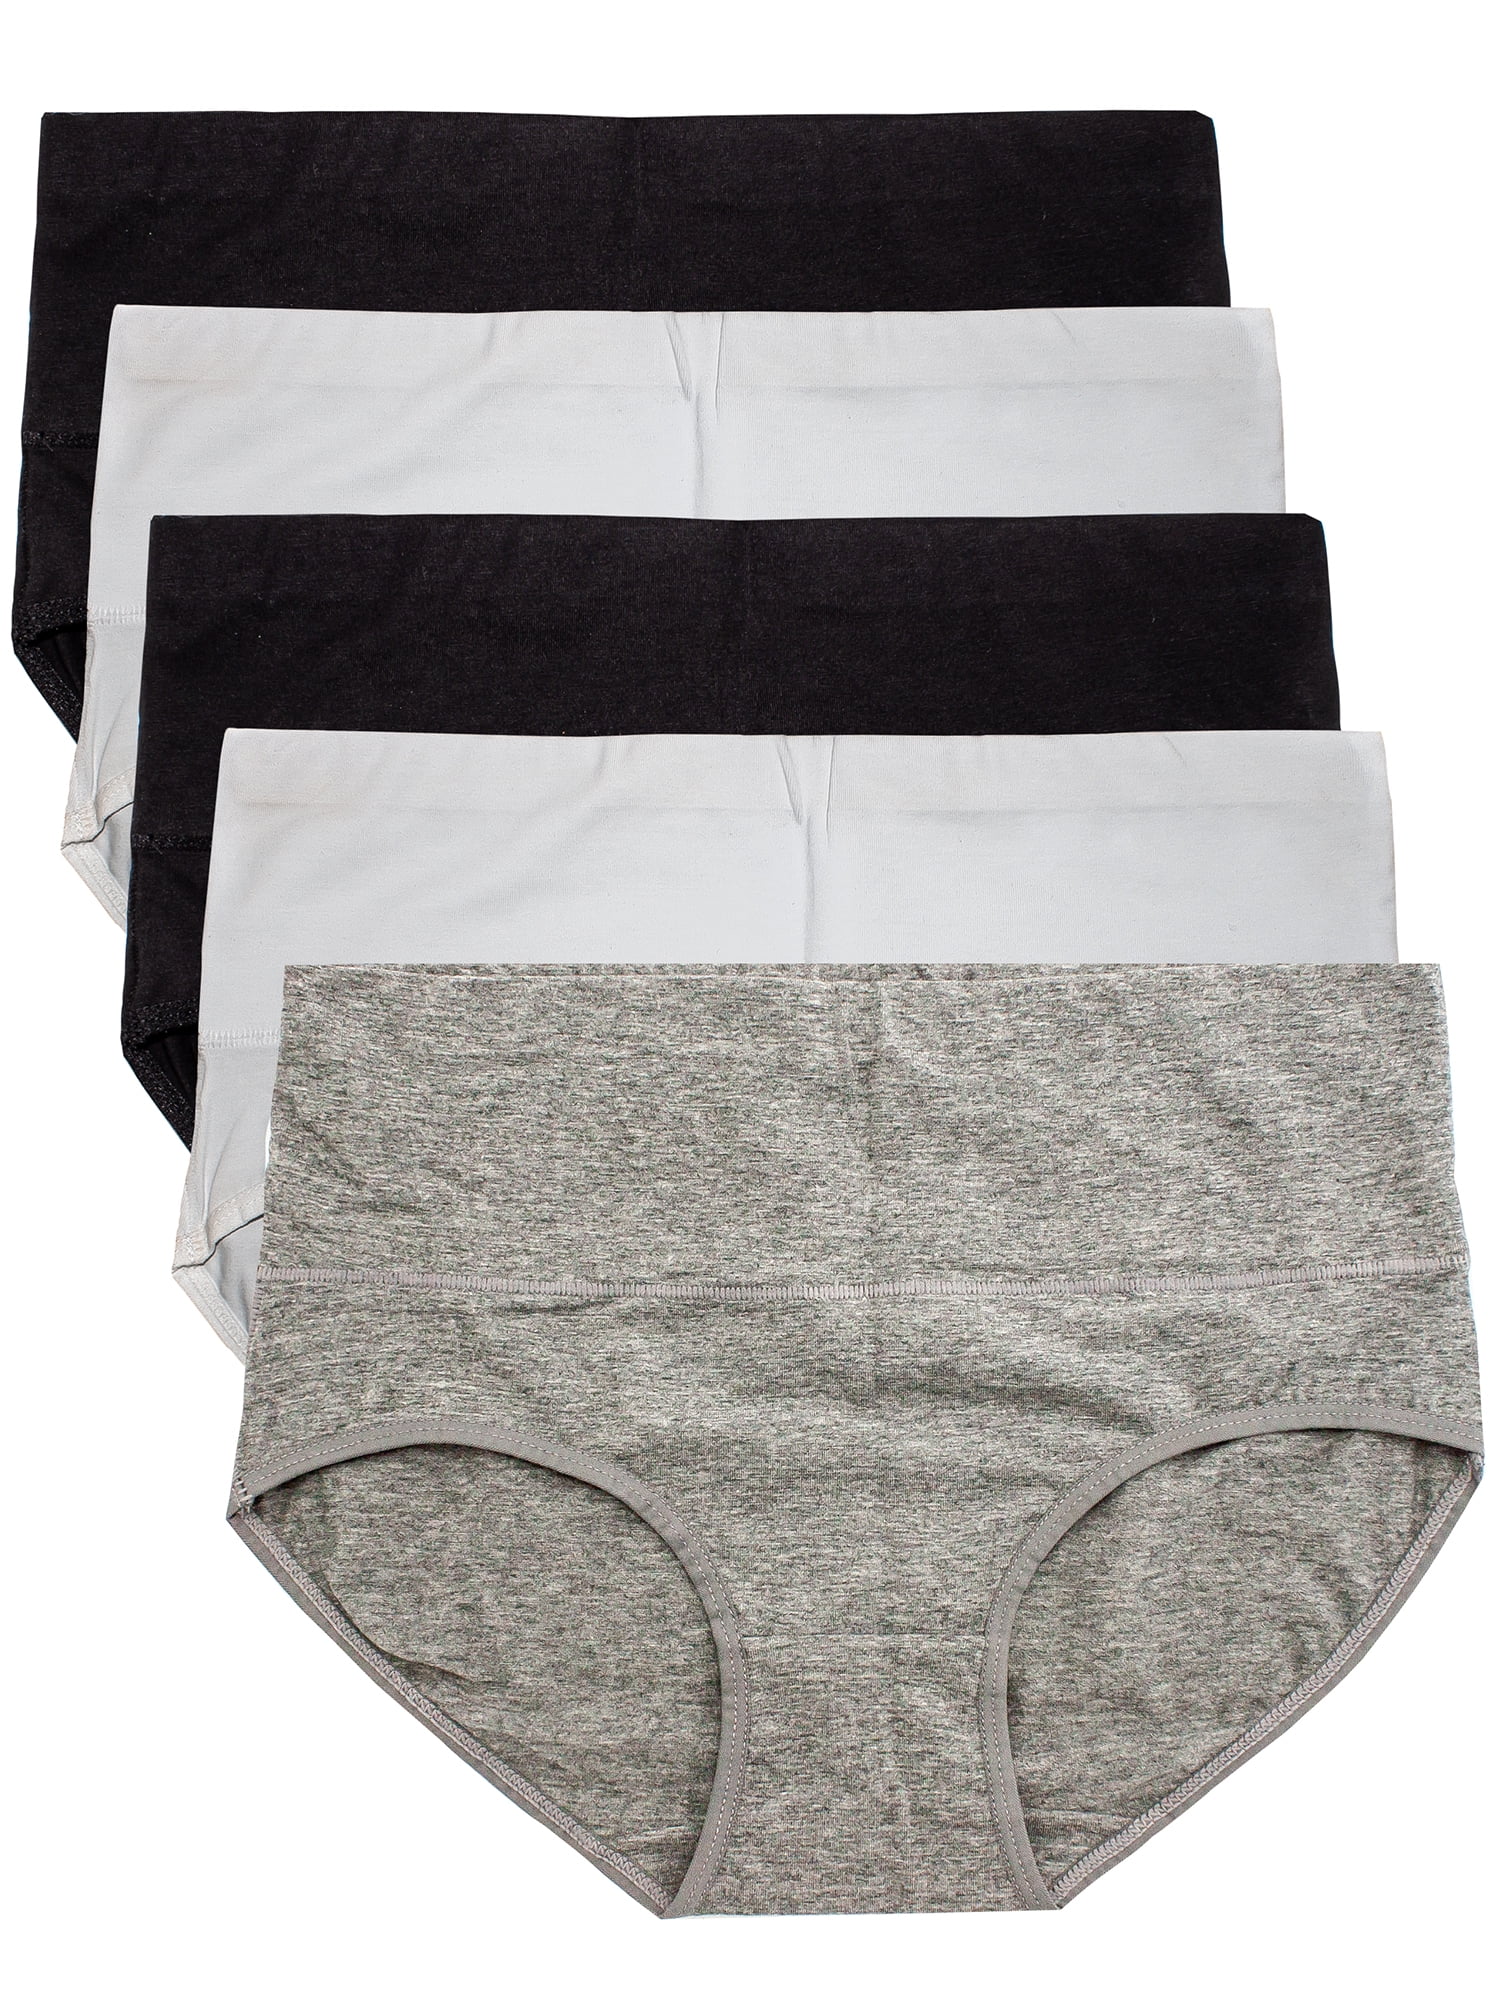 B2BODY Women's 6 Pack Regular & Plus Size Comfort Cotton Hipster Panties 